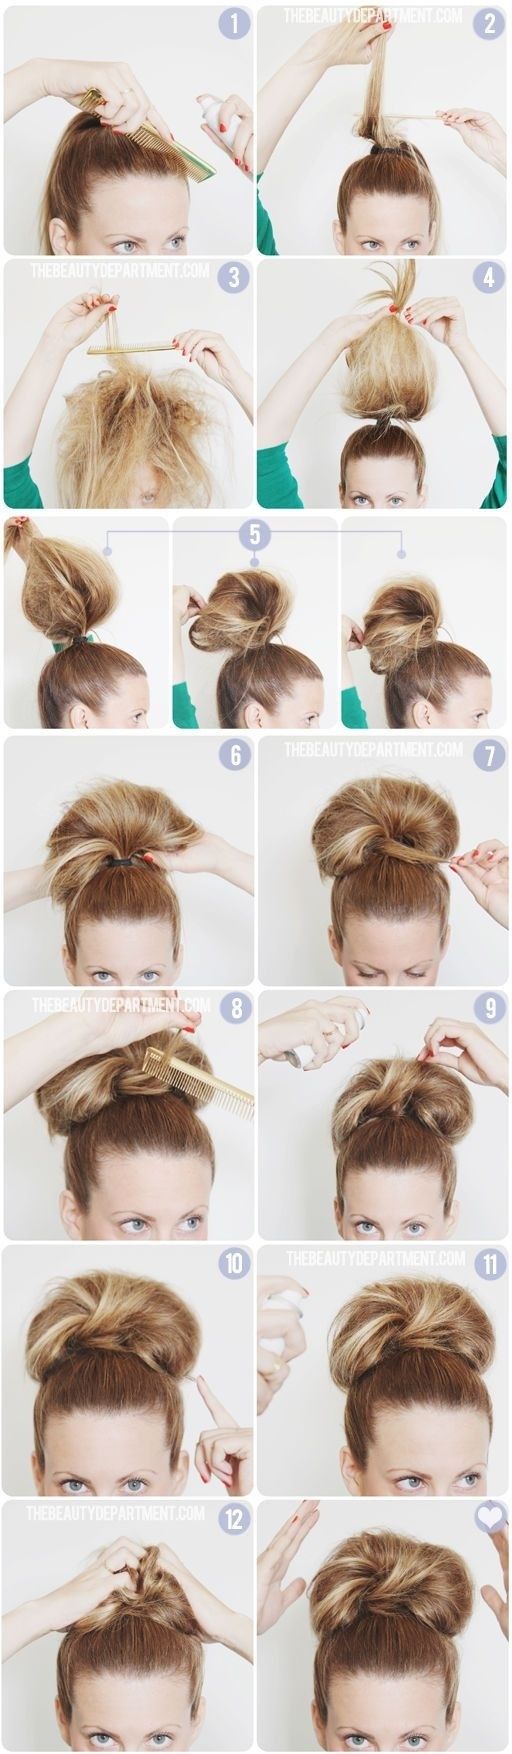 10-Super-Easy-Updo-Hairstyles-Tutorials.jpg